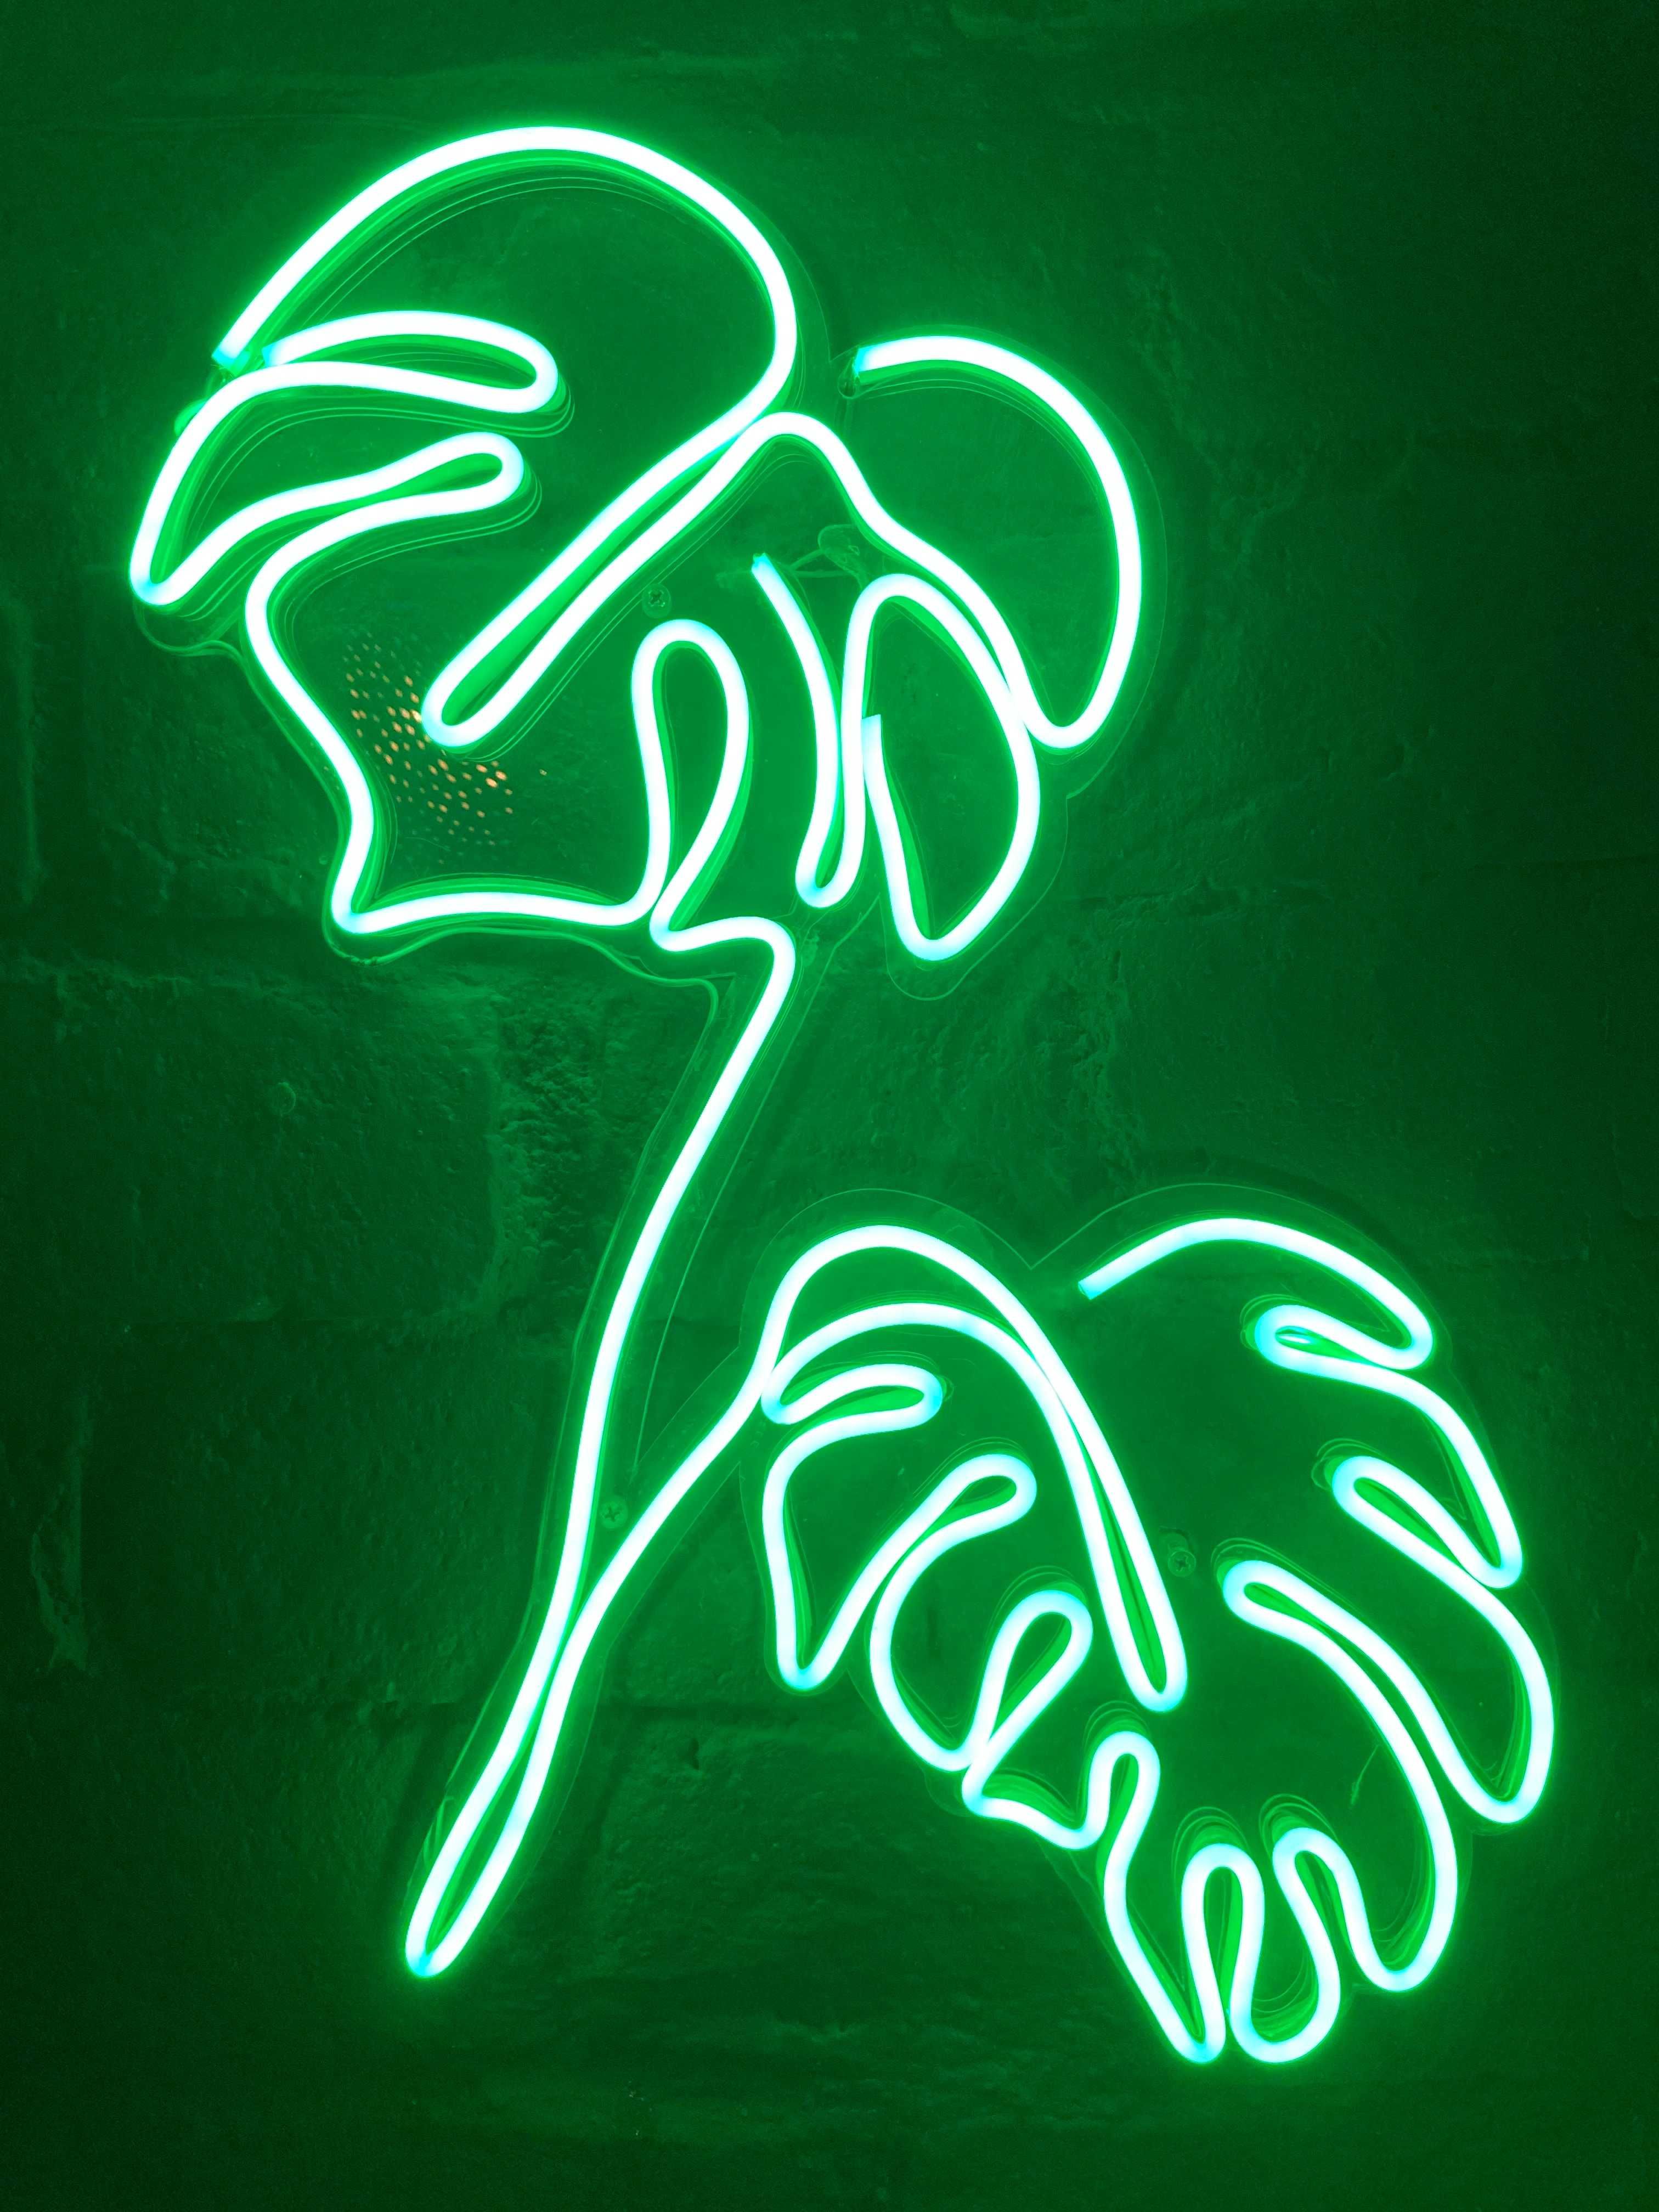 Semne neon custom made